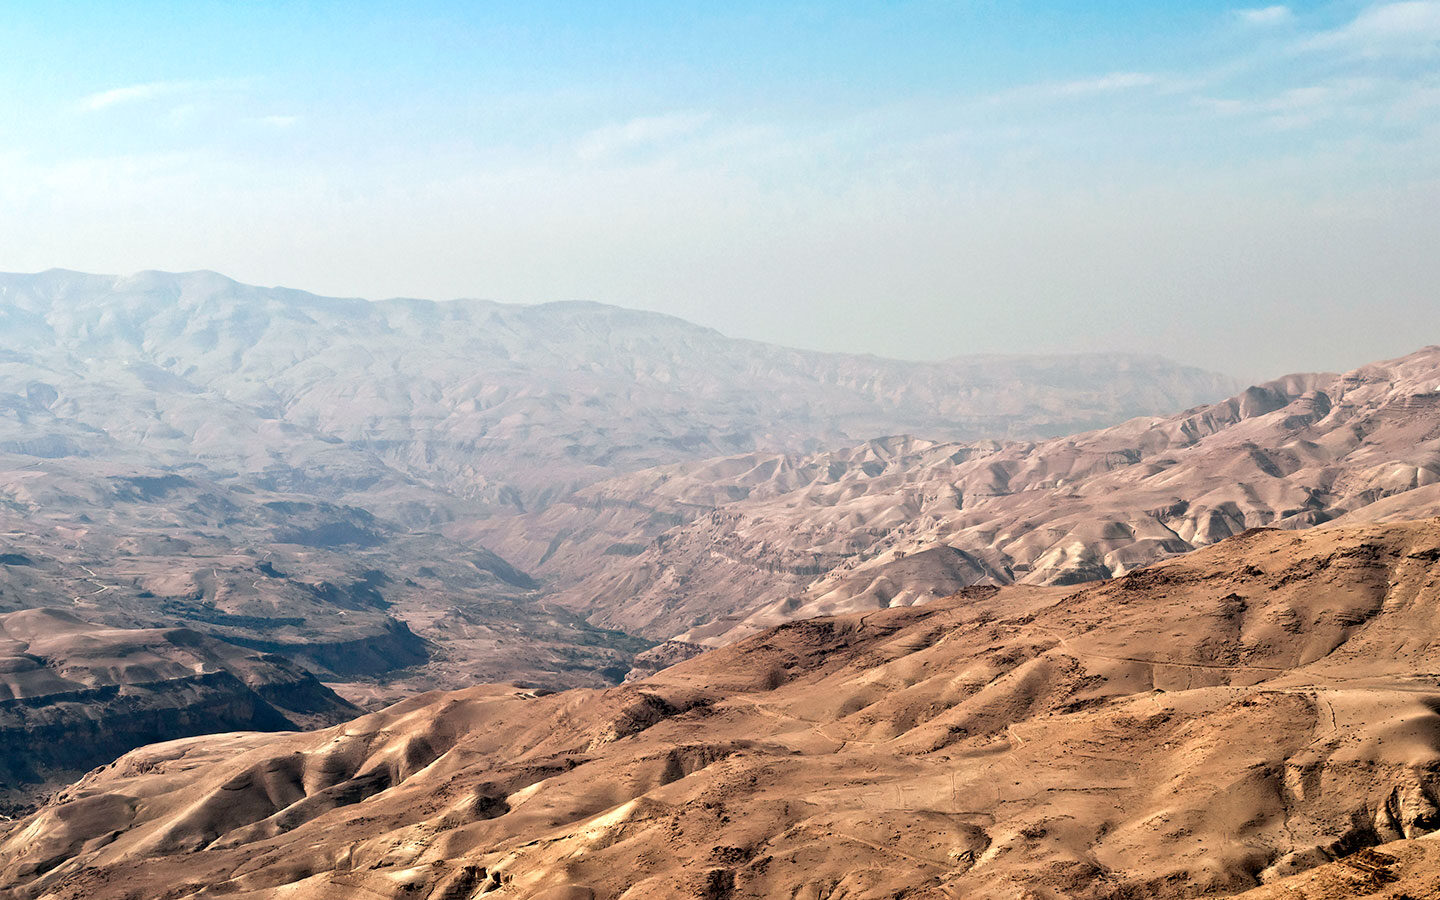 Views along the King’s Highway in Jordan